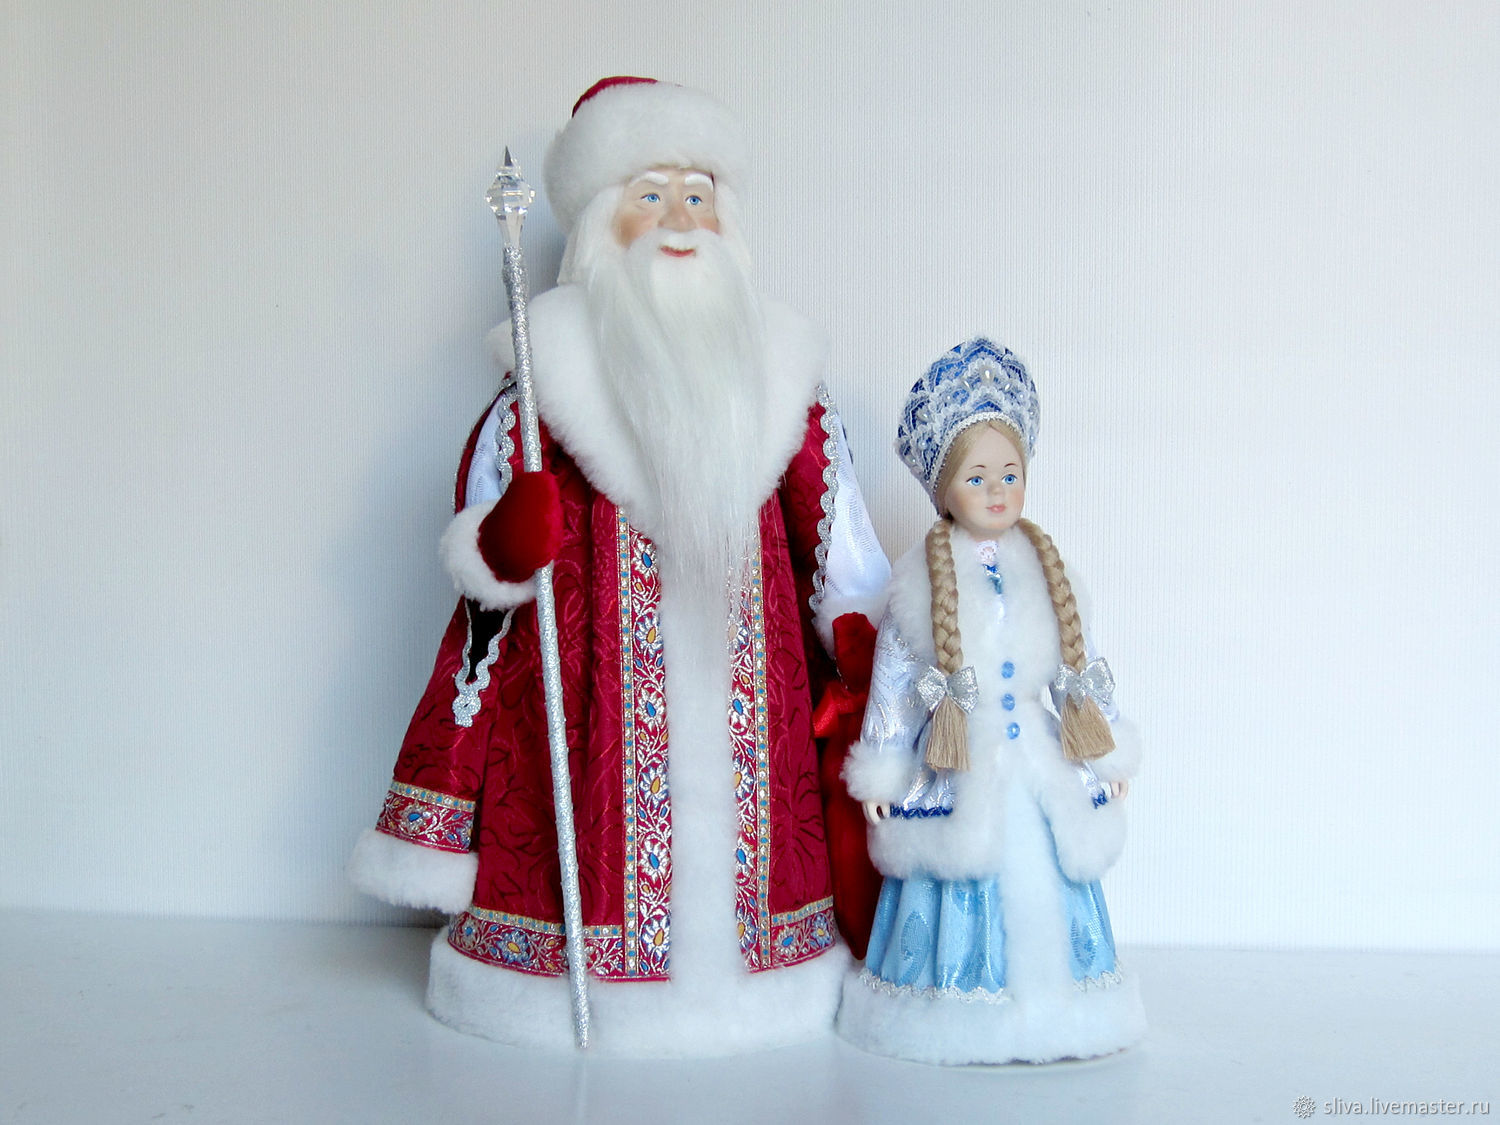 Аутентичная фигура Деда Мороза из советской эпохи